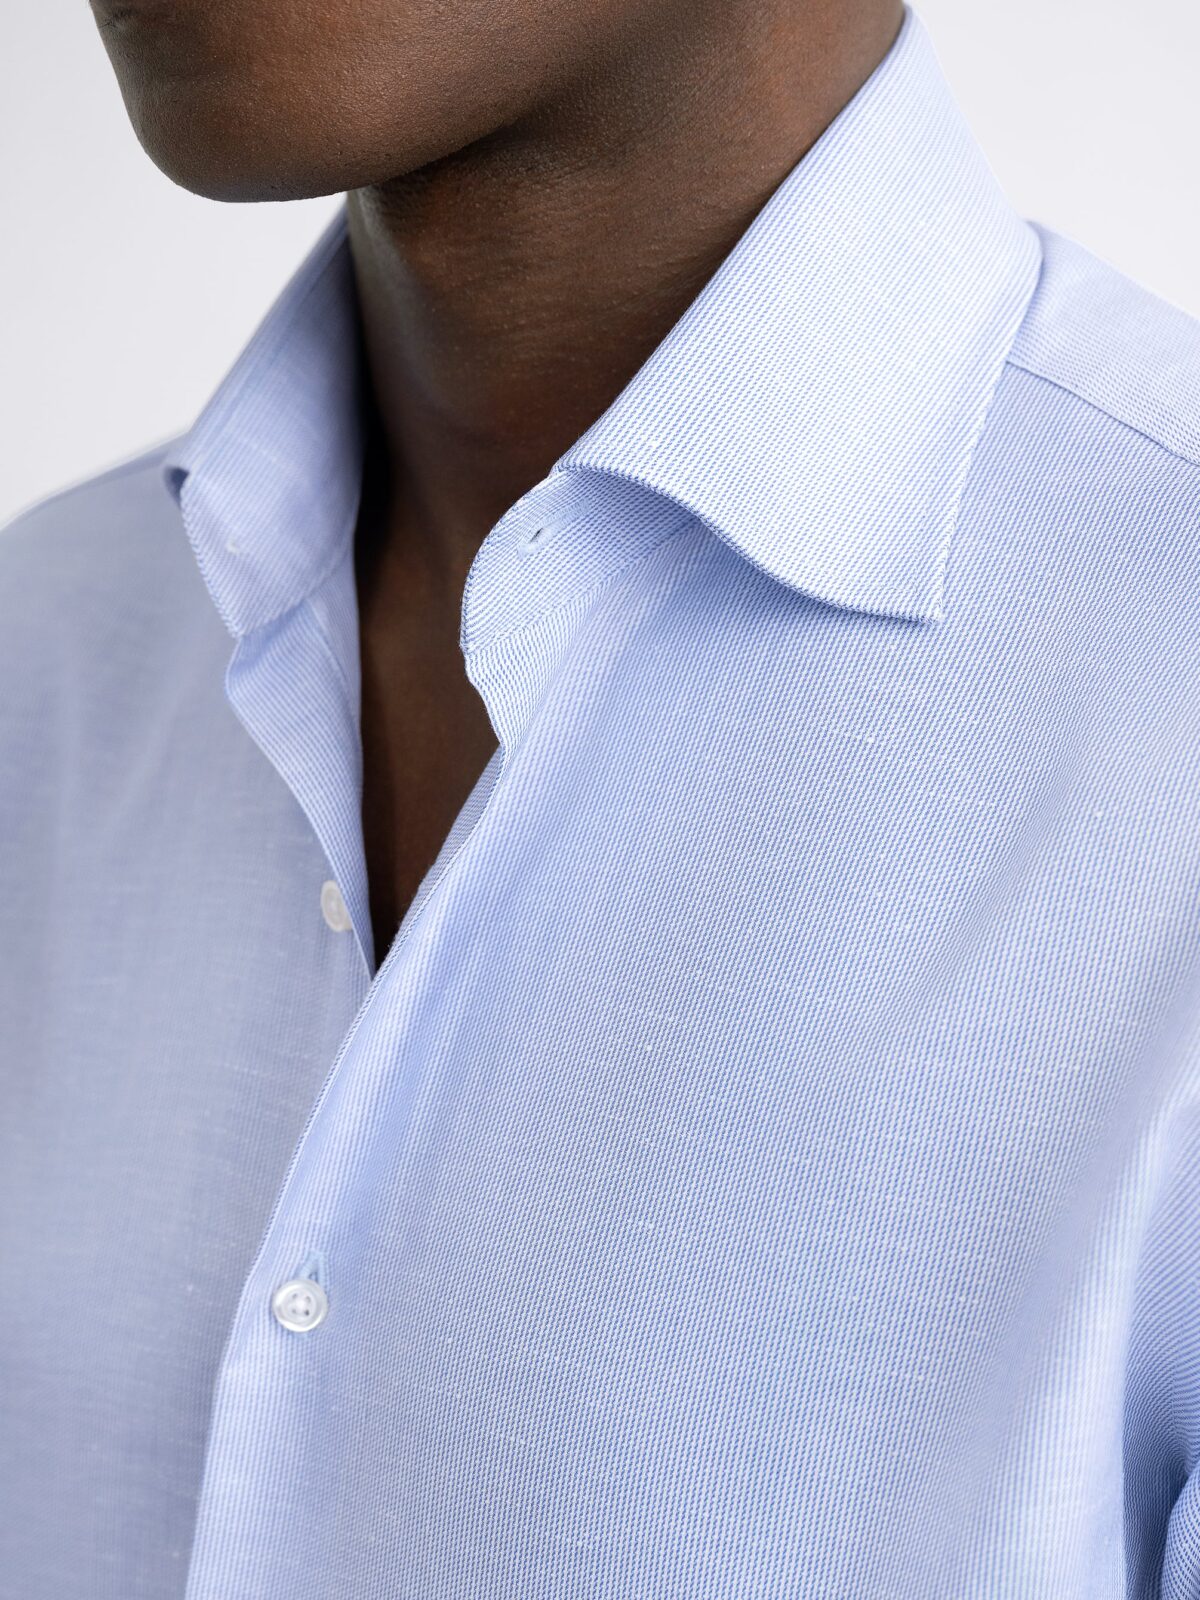 Check styling ideas for「Premium Linen Long Sleeve Shirt、Striped Linen Blend  Easy Pants」